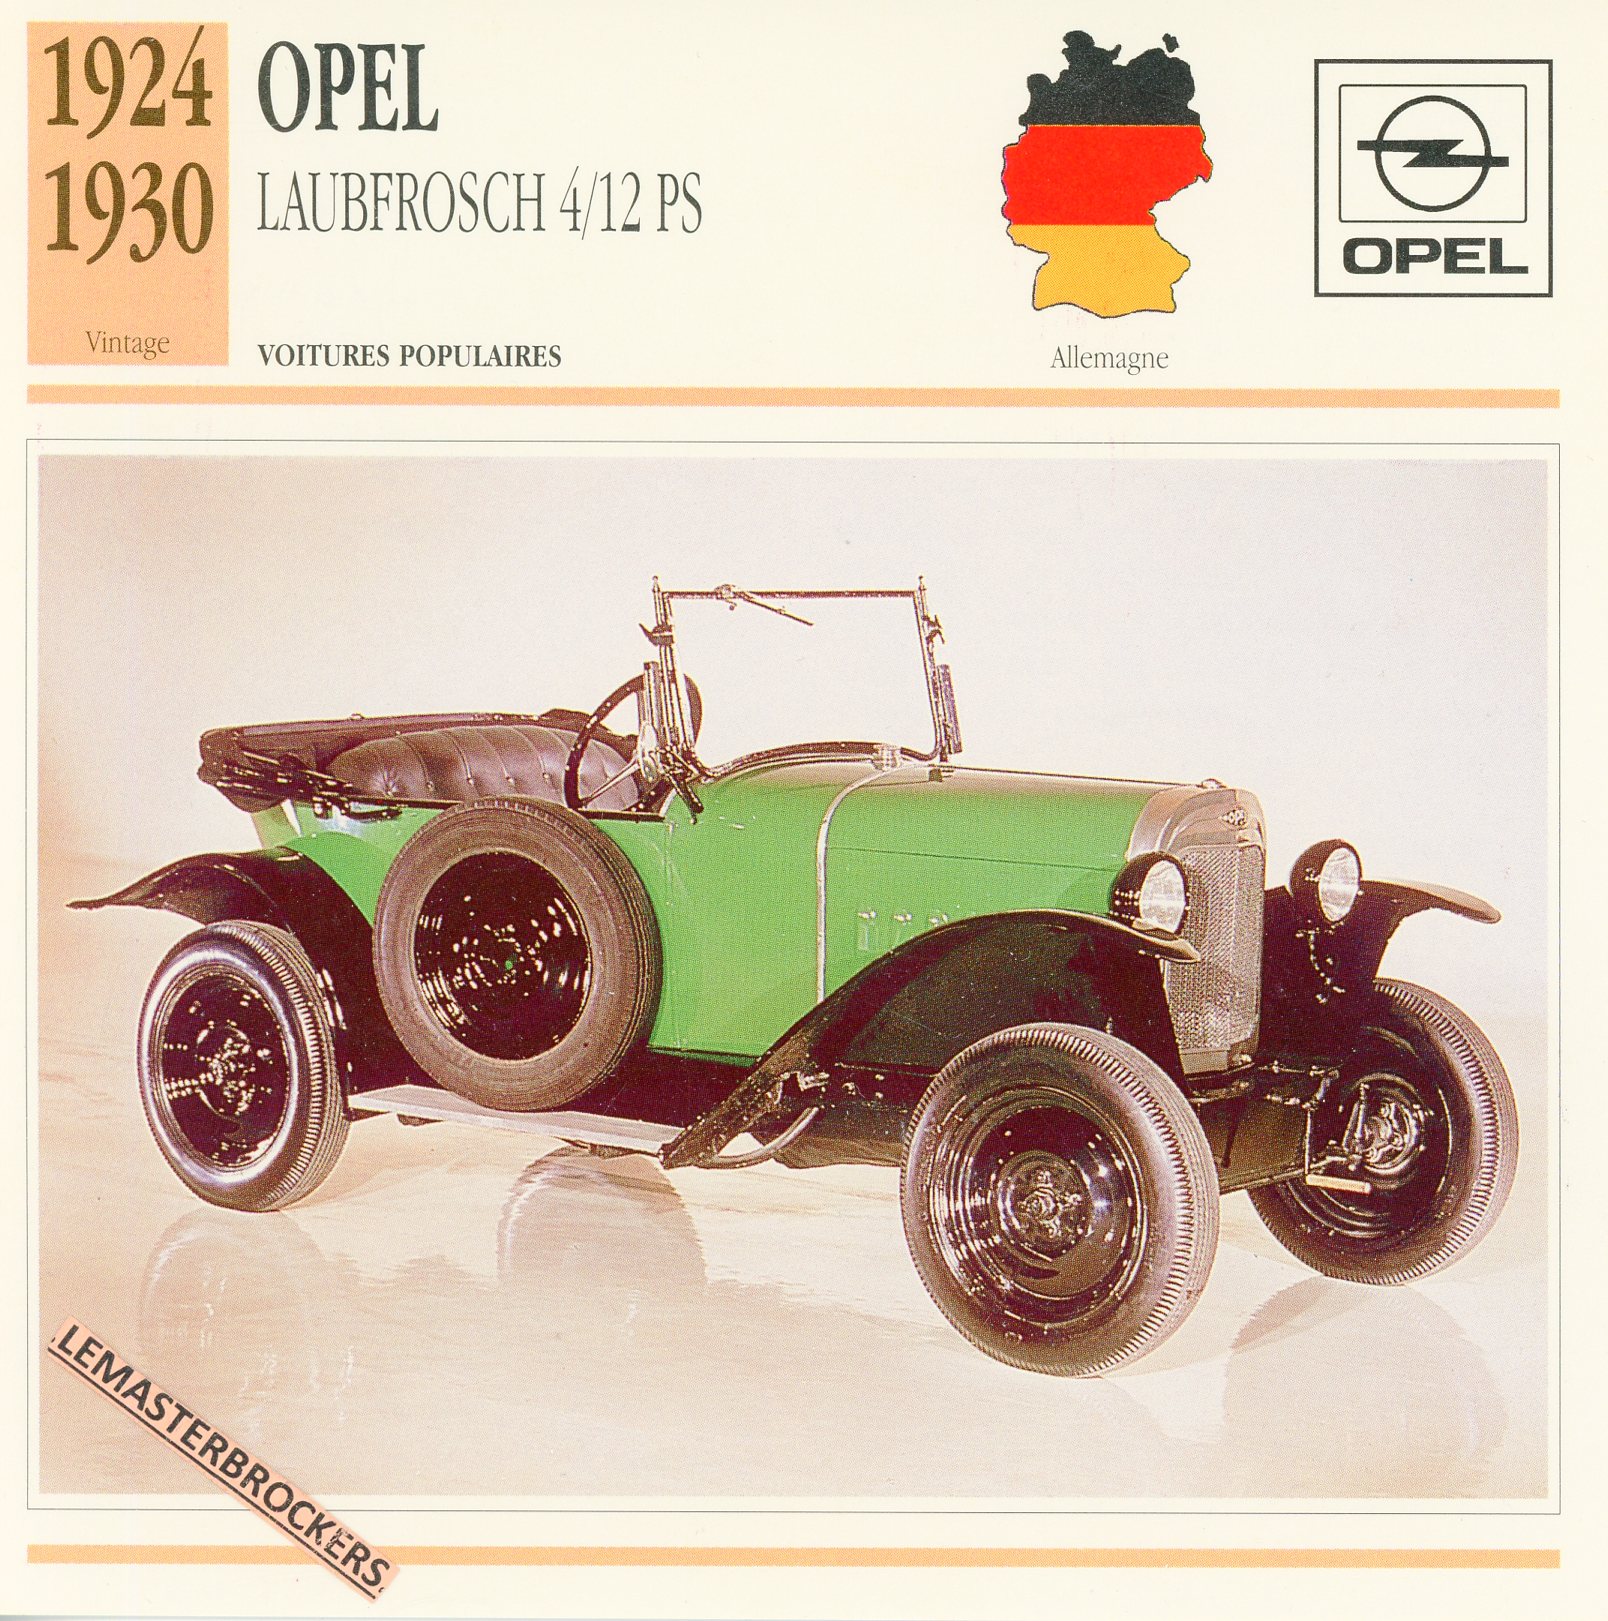 OPEL LAUBFROSCH 4/12 PS 1924 1930 - FICHE AUTO OPEL